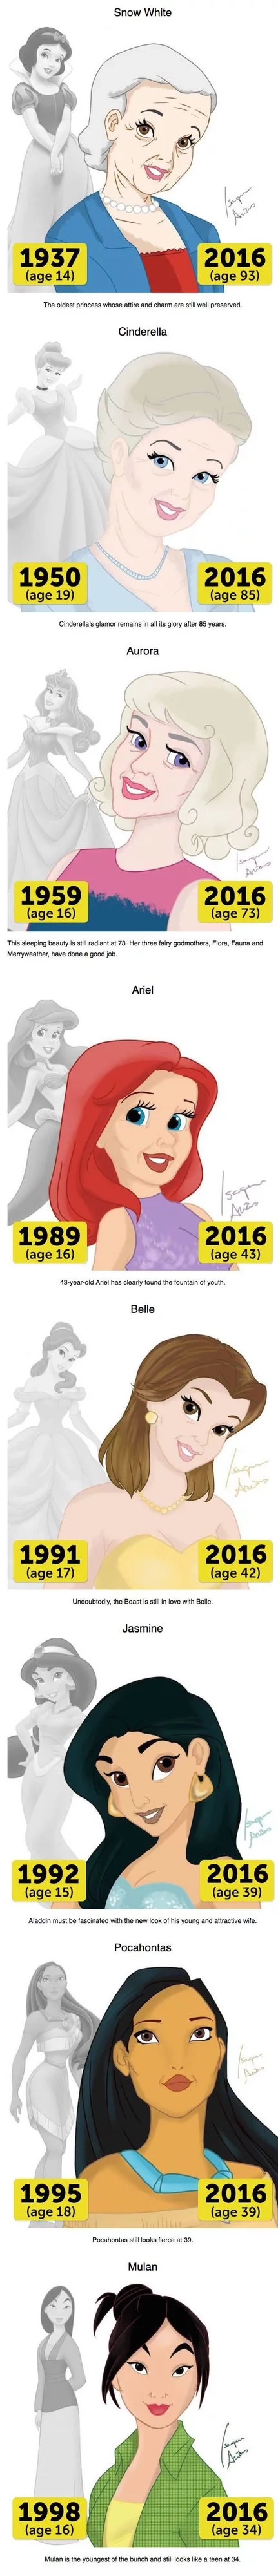 What Disney princesses would look like in 2016?